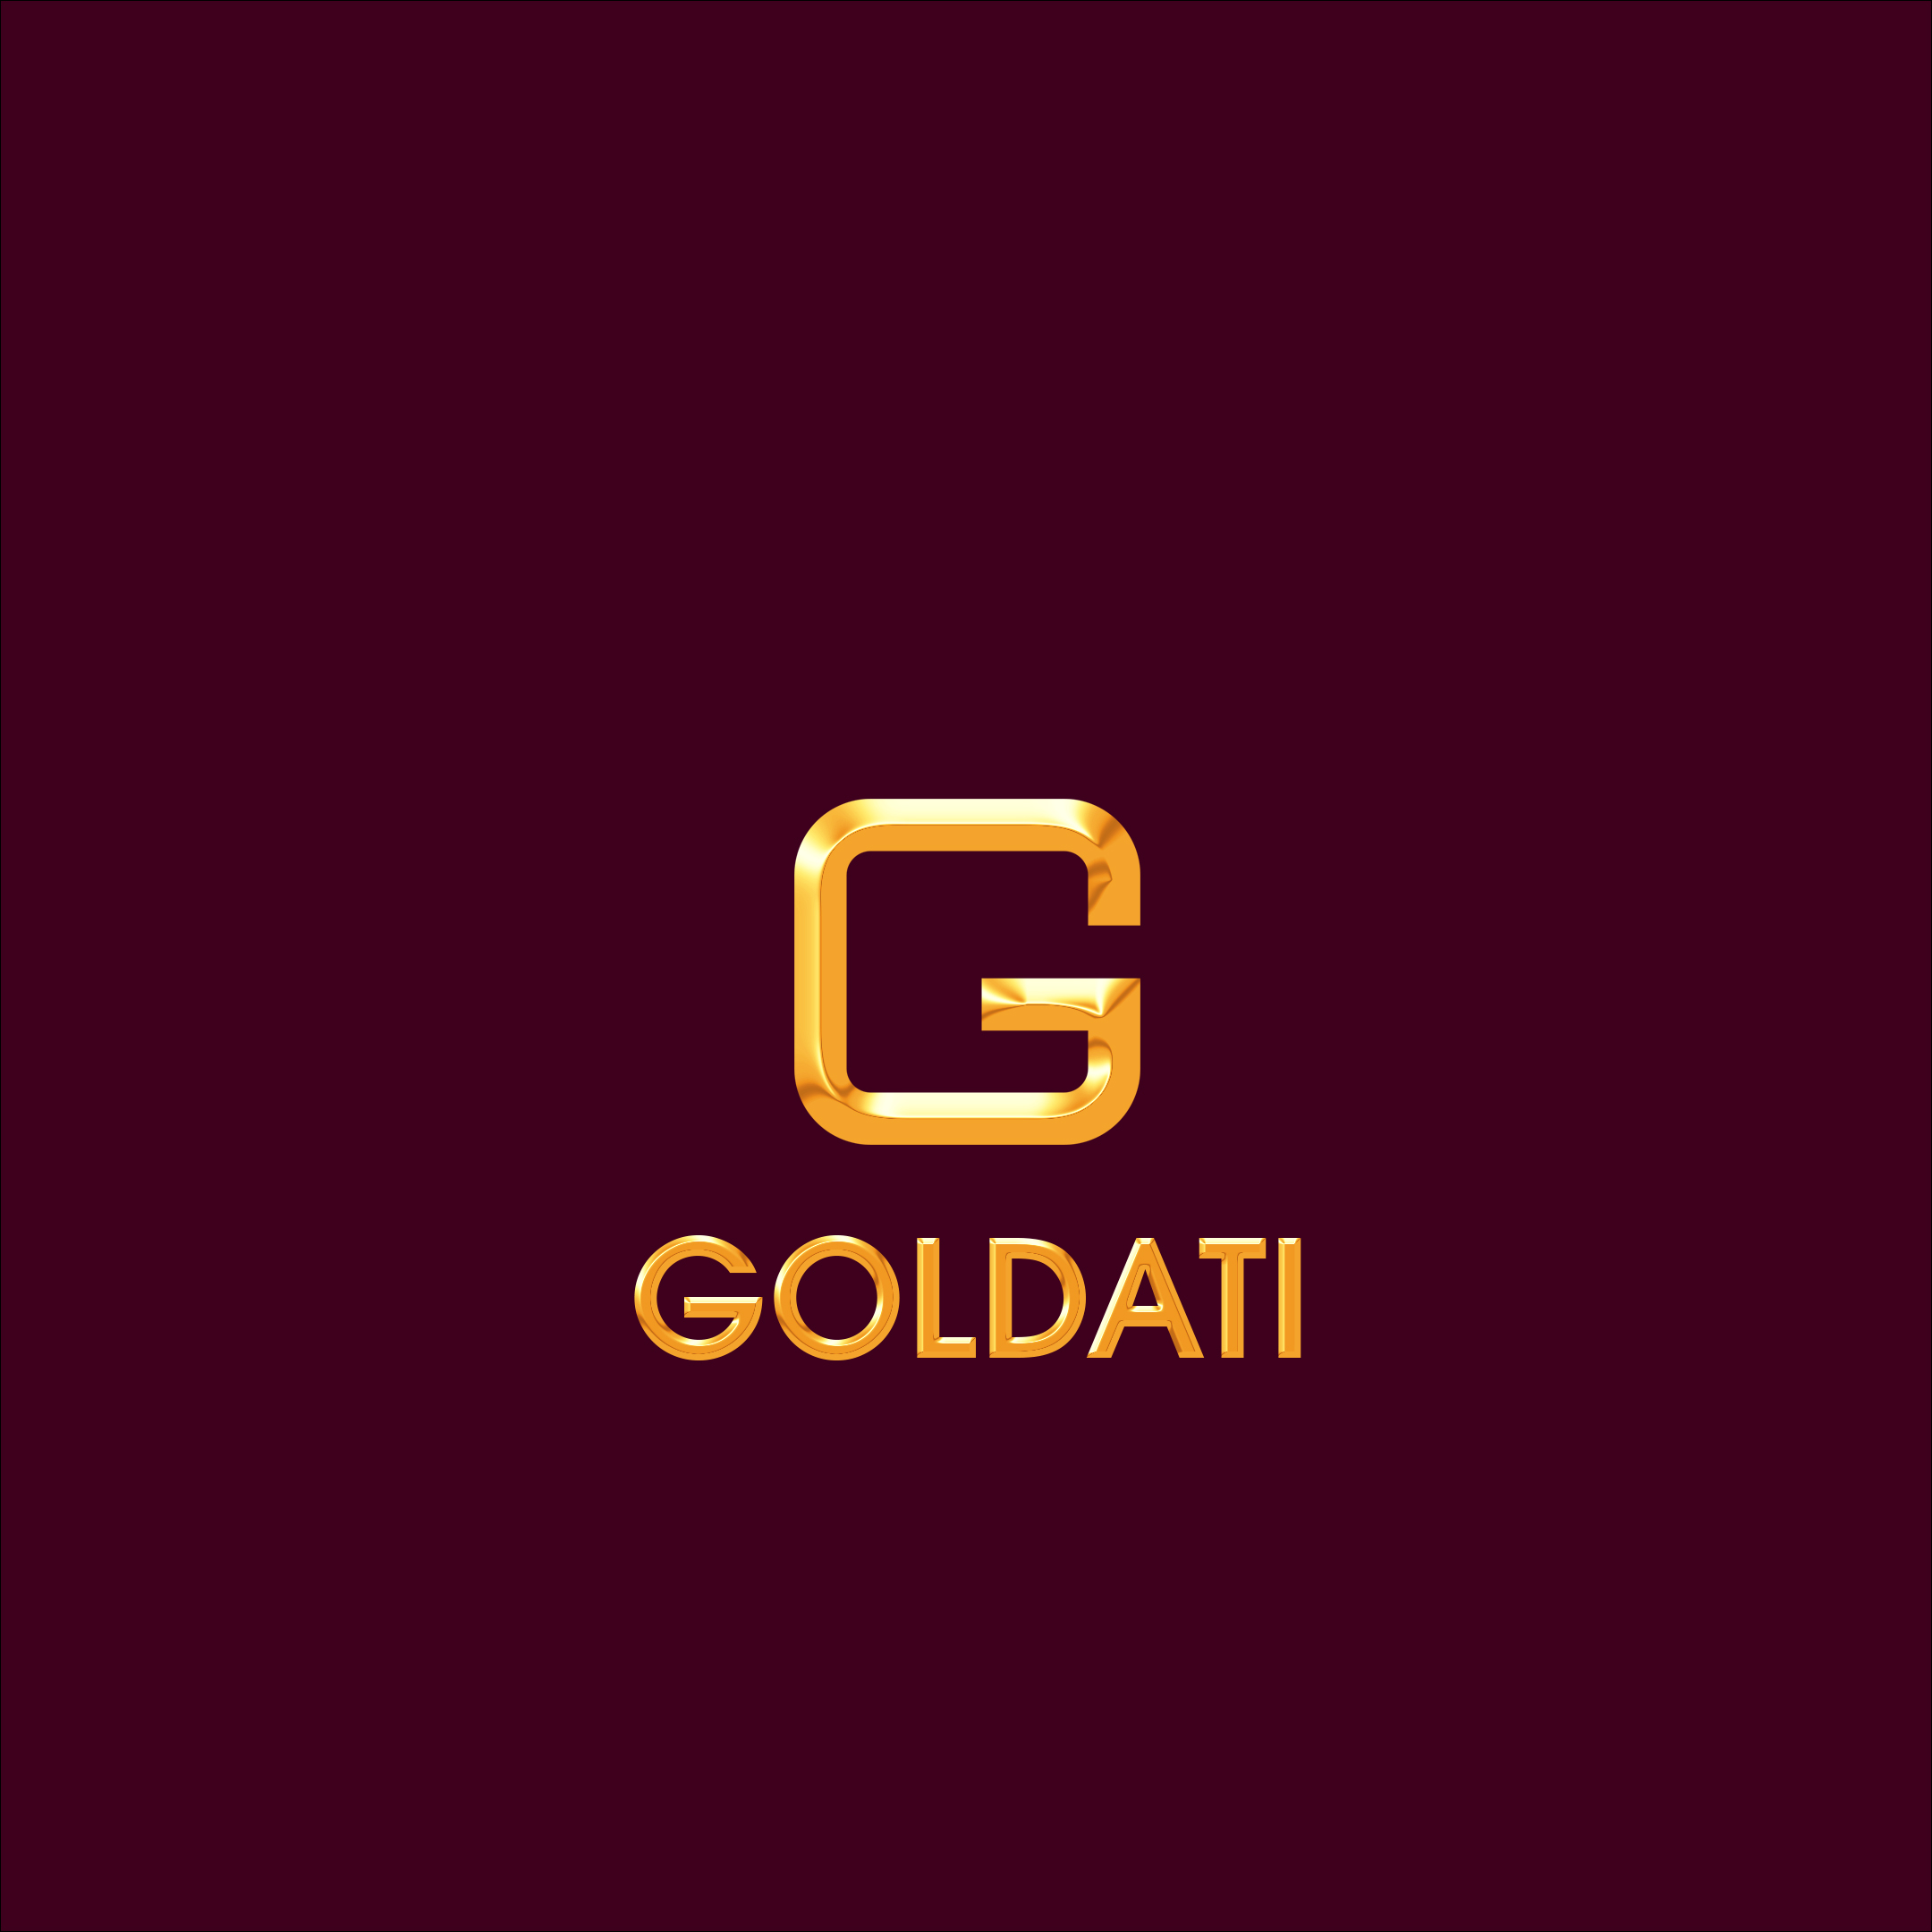 Goldati_Final.jpg